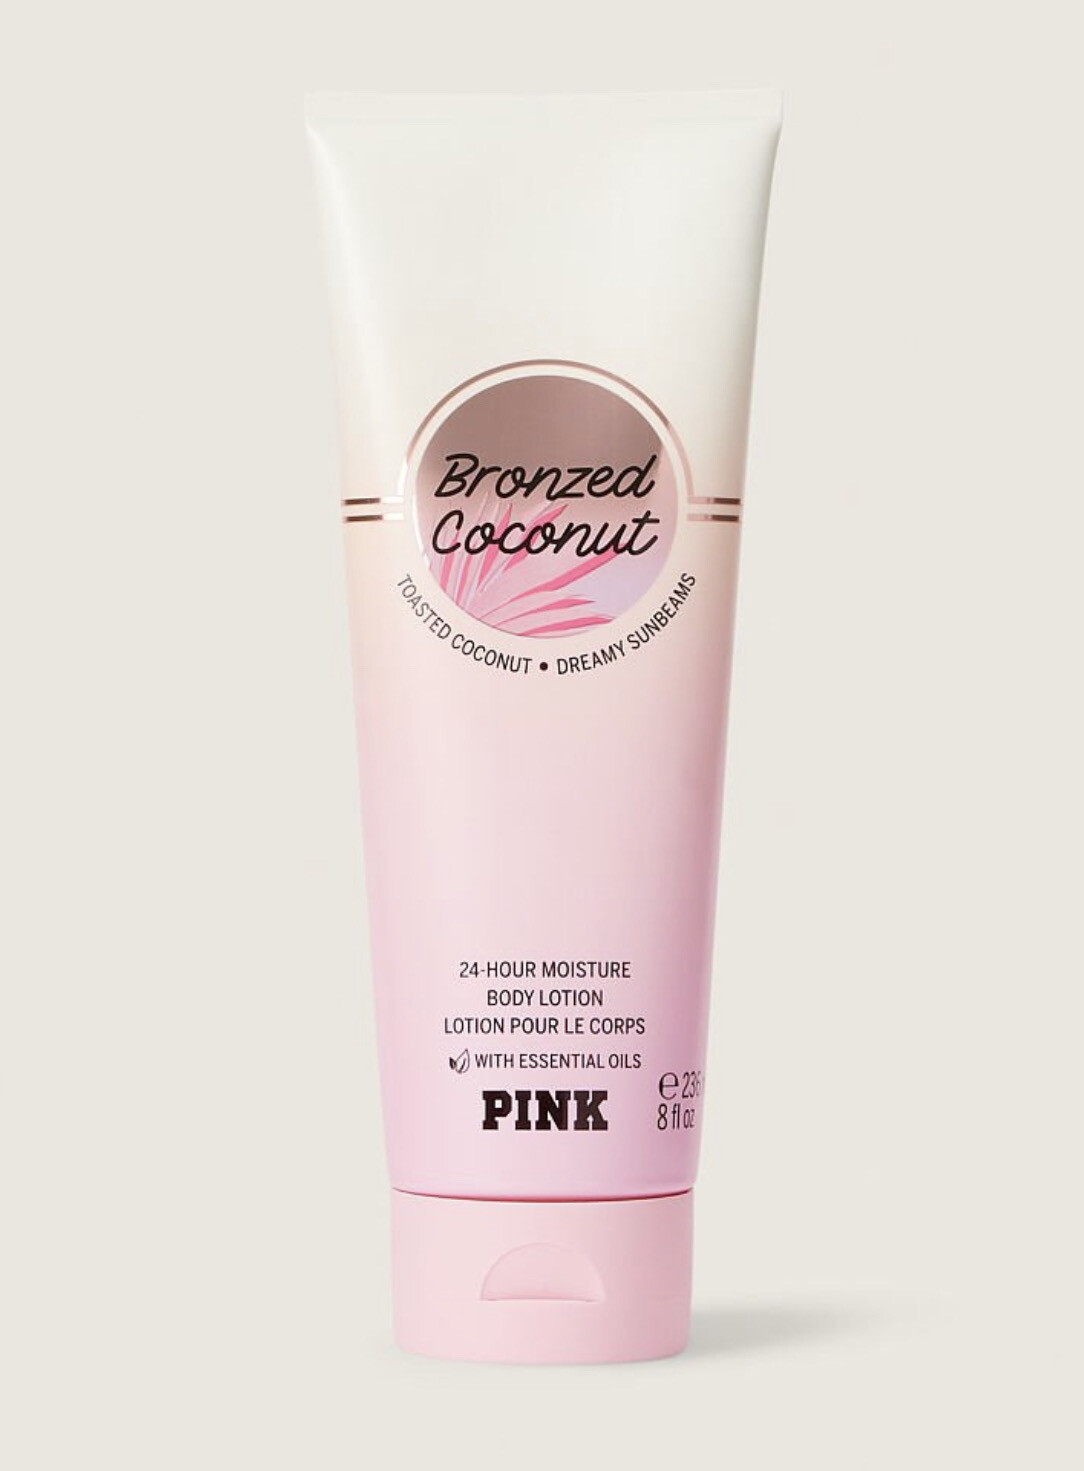 Victoria’s Secret - Tropic of PINK Body Lotion | Bronzed Coconut